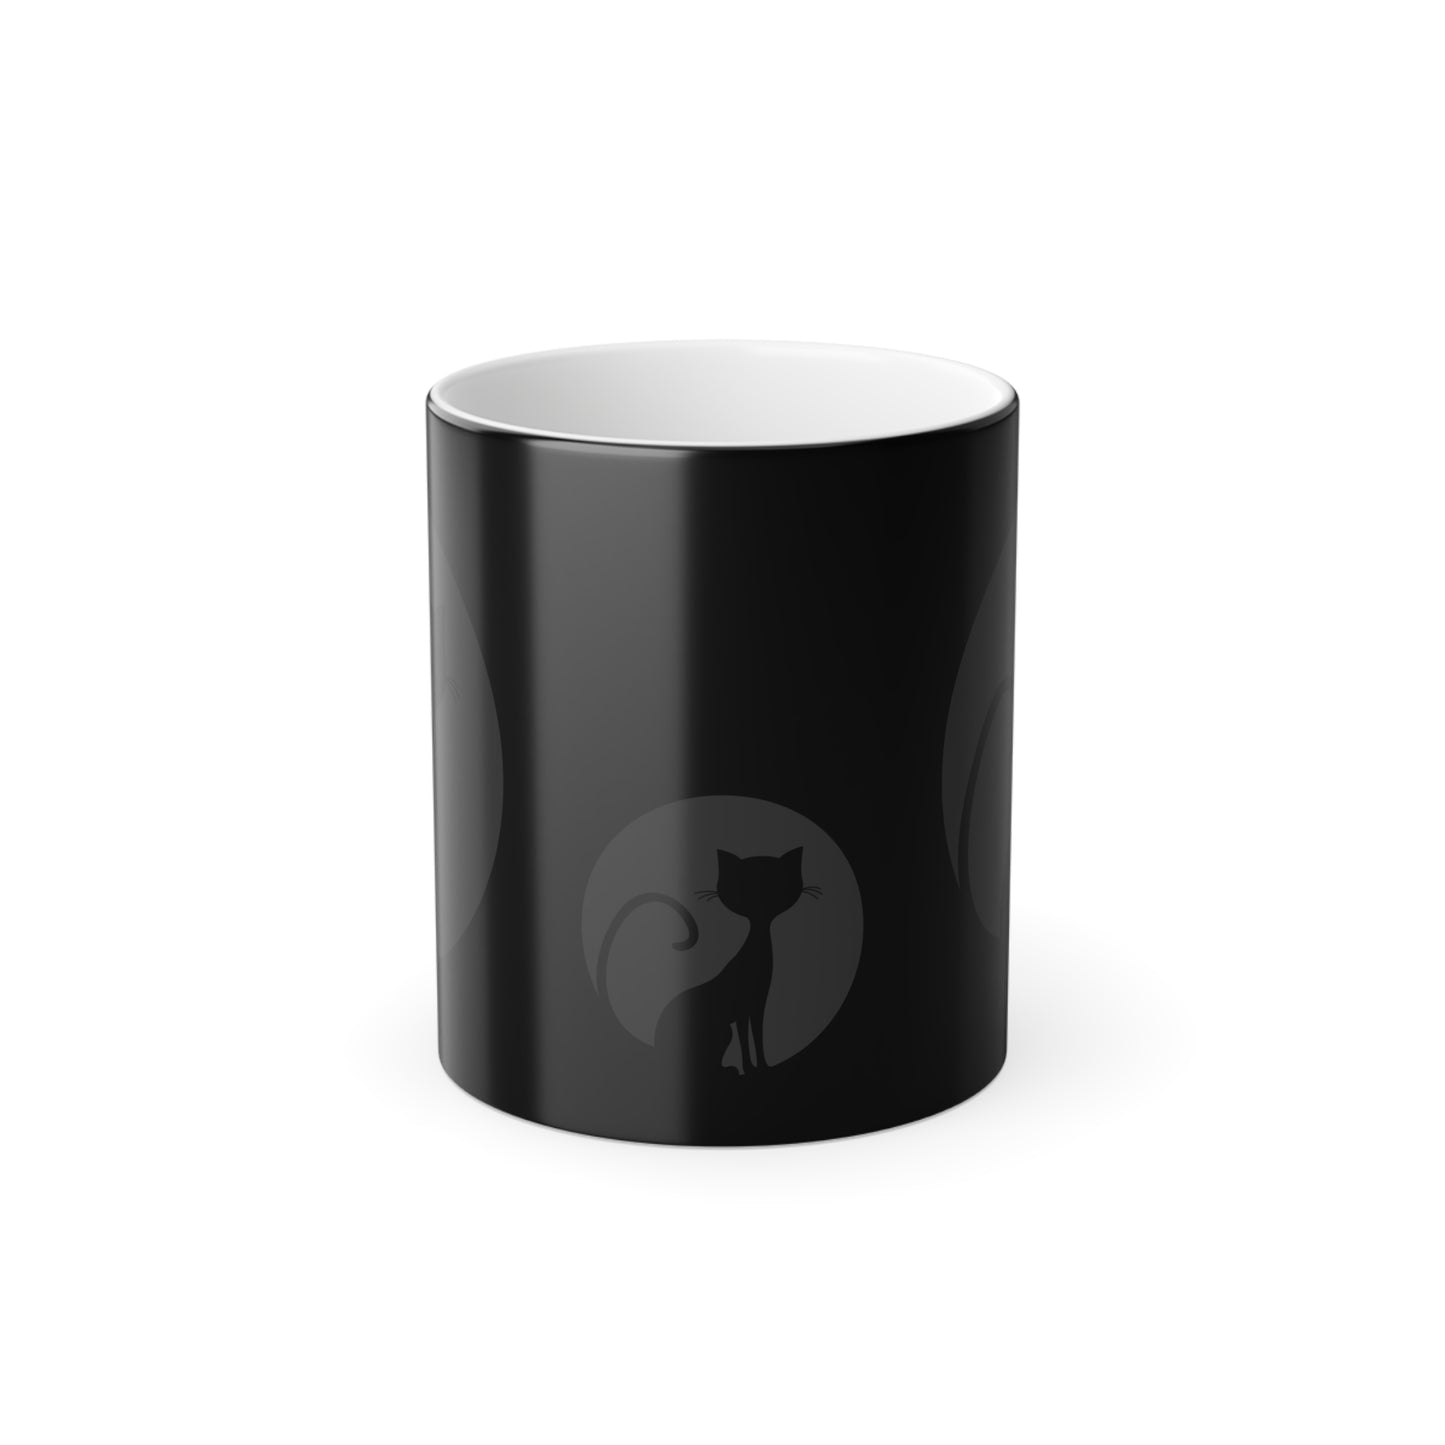 Color morphing ceramic custom Mug 11oz  (Black cat)